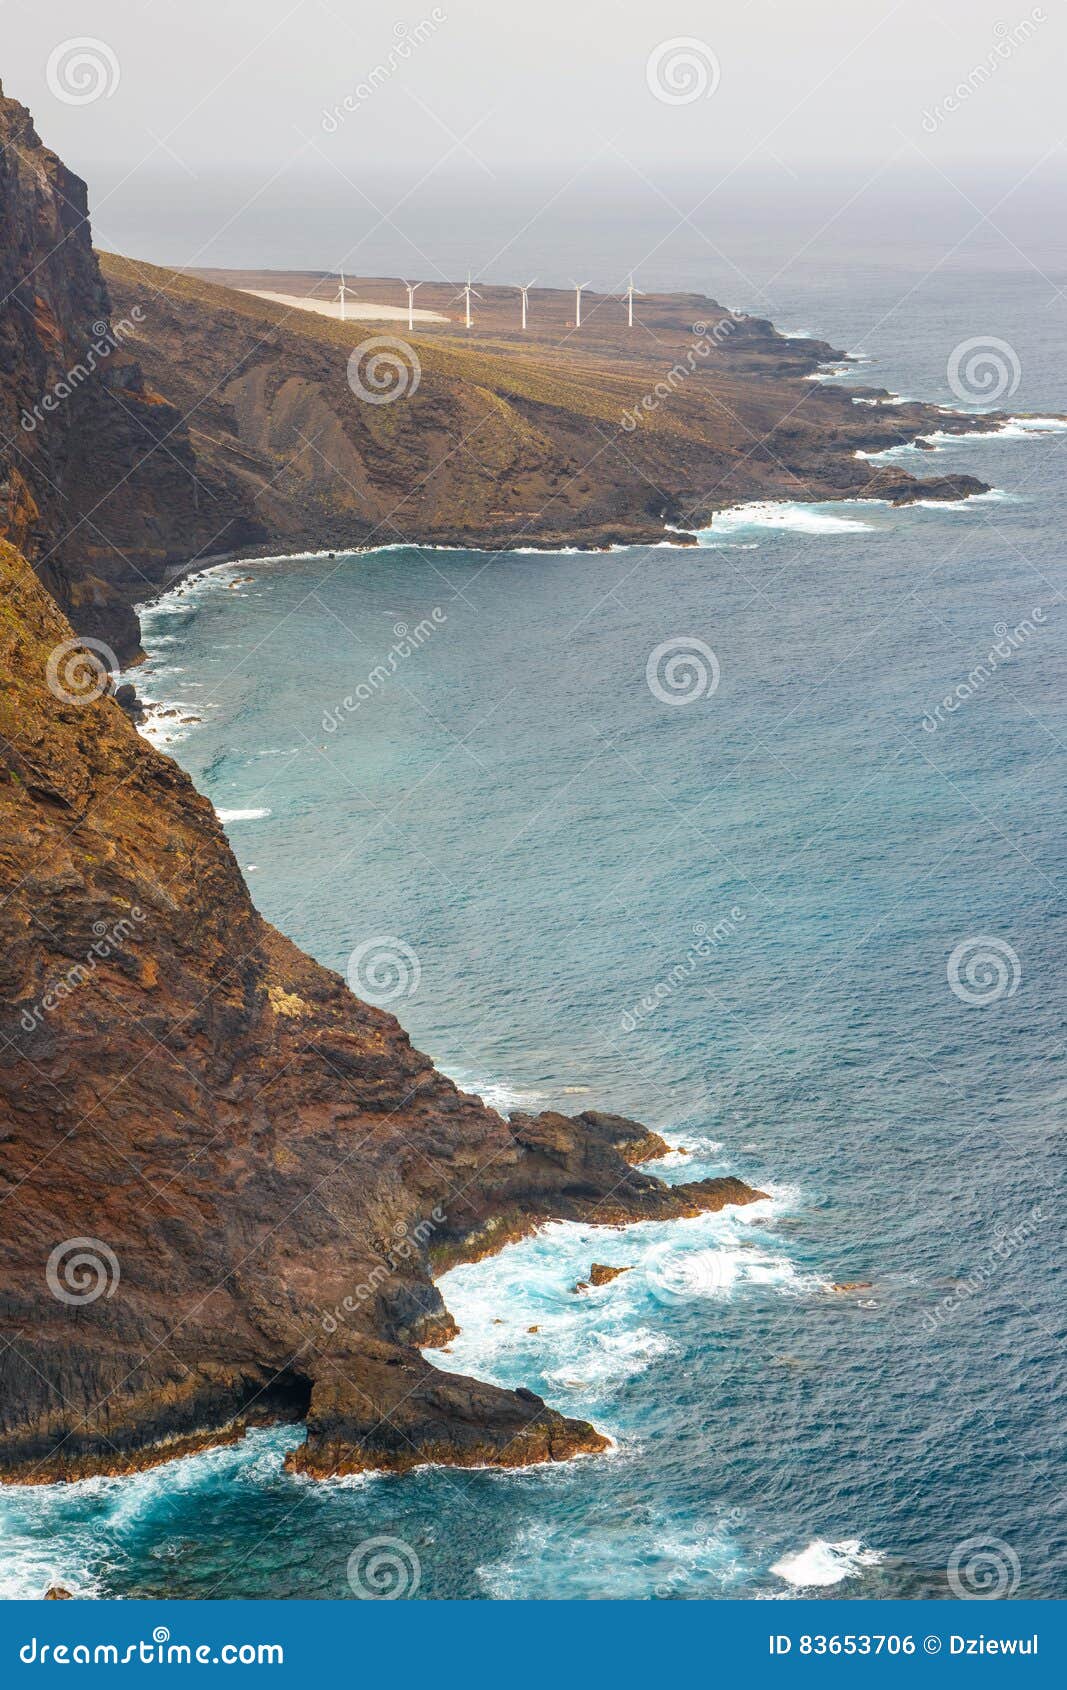 coast of tenerife near punto teno lighthouse